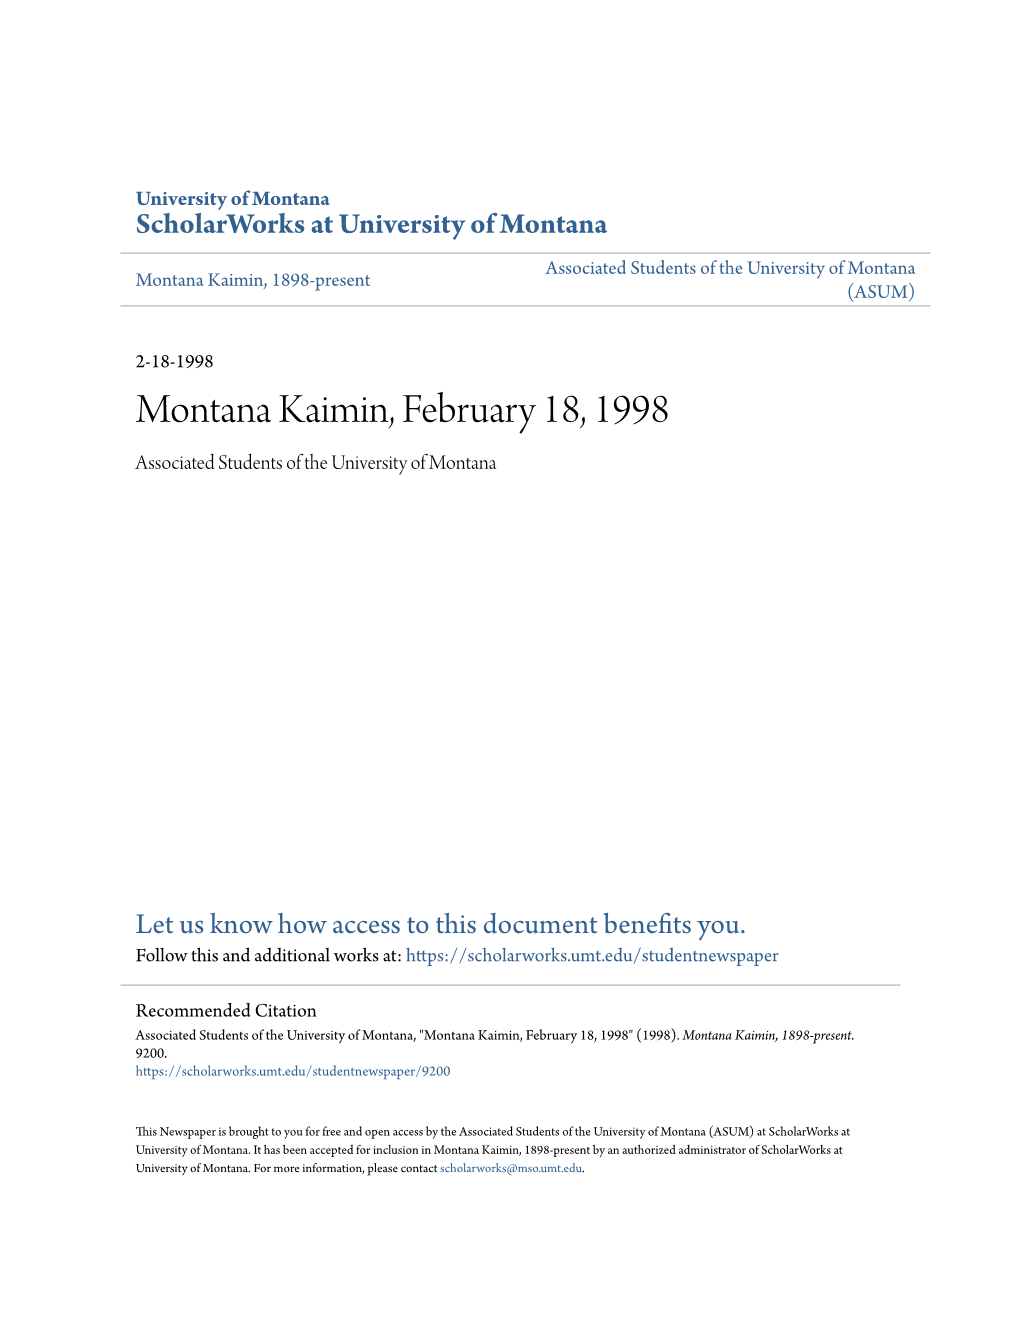 Montana Kaimin, February 18, 1998 Associated Students of the University of Montana